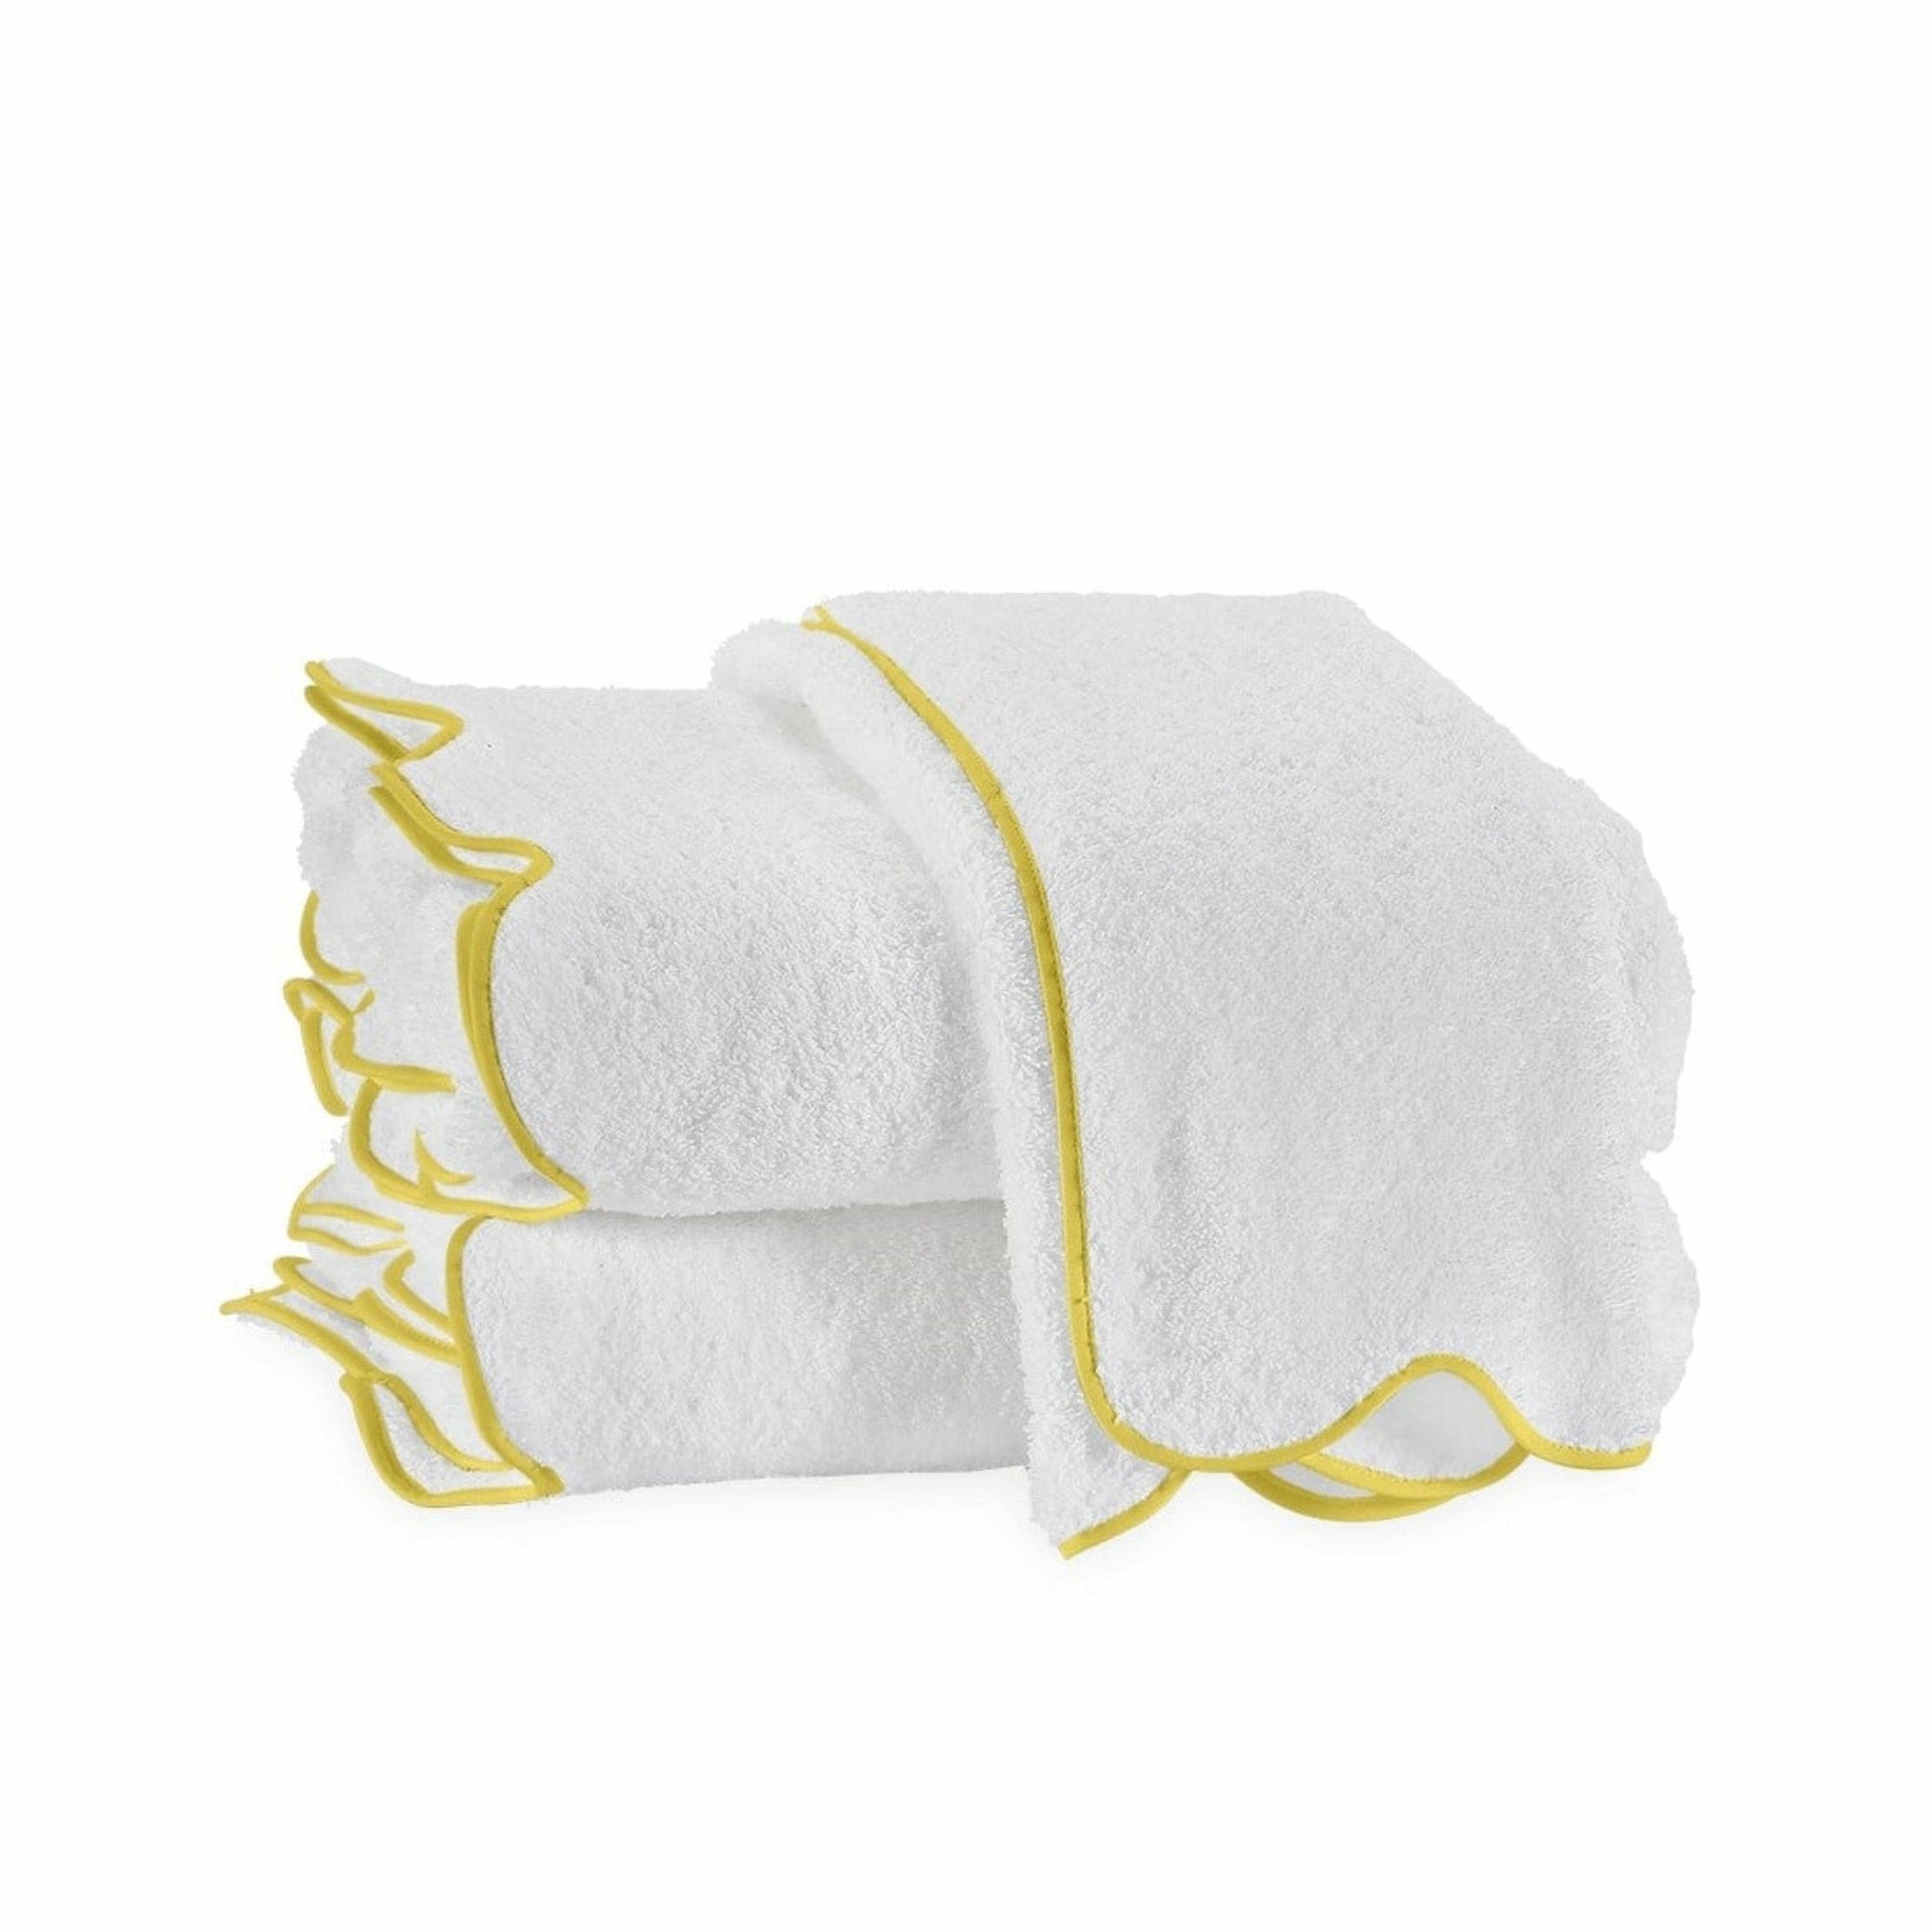 Silo Image of Matouk Cairo Scallop Bath Towels in Color Lemon